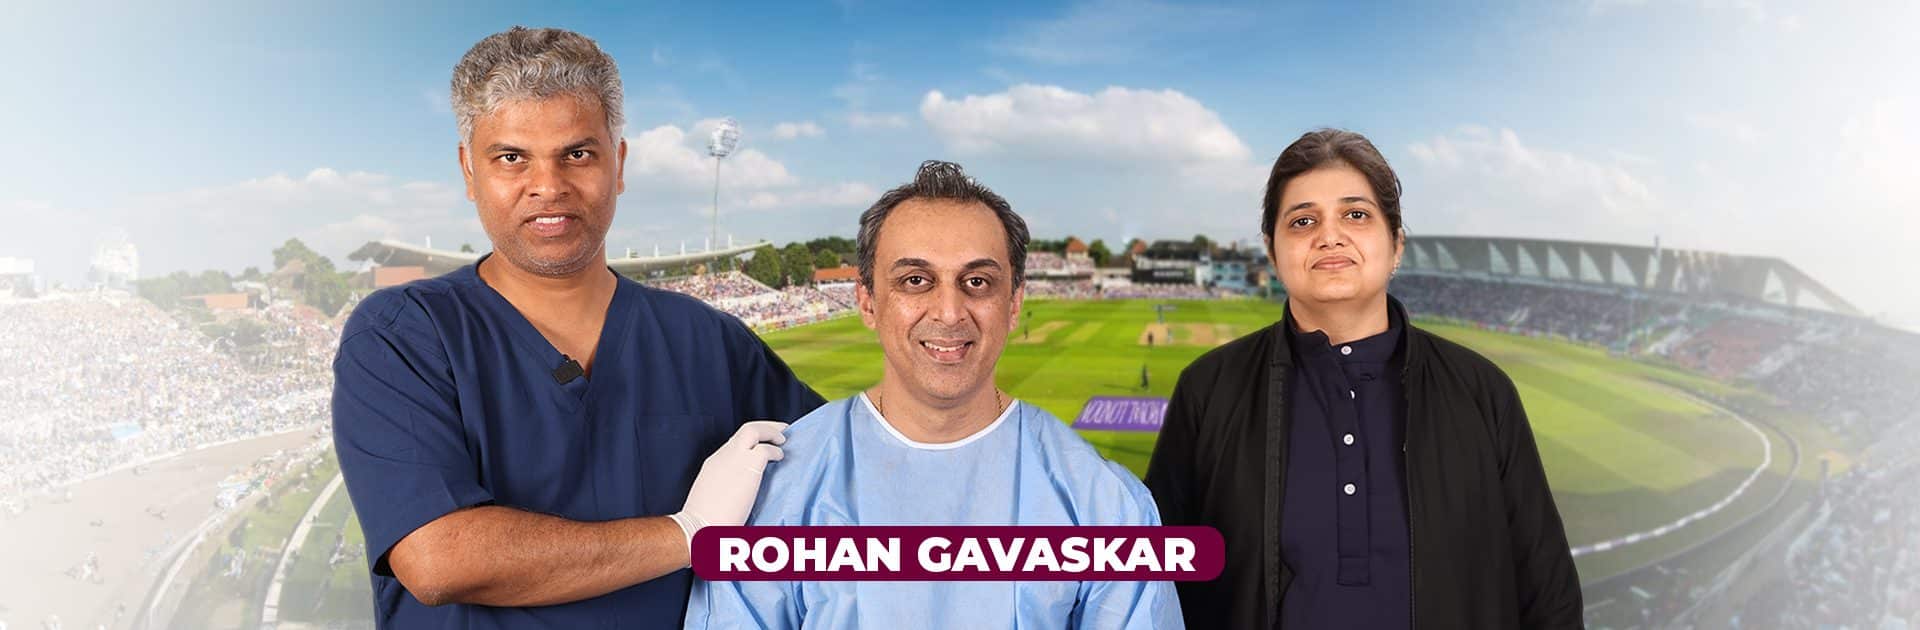 Cricketer Hair Transplant: Rohan Gavaskar Reveals Hair Restoration with Eugenix